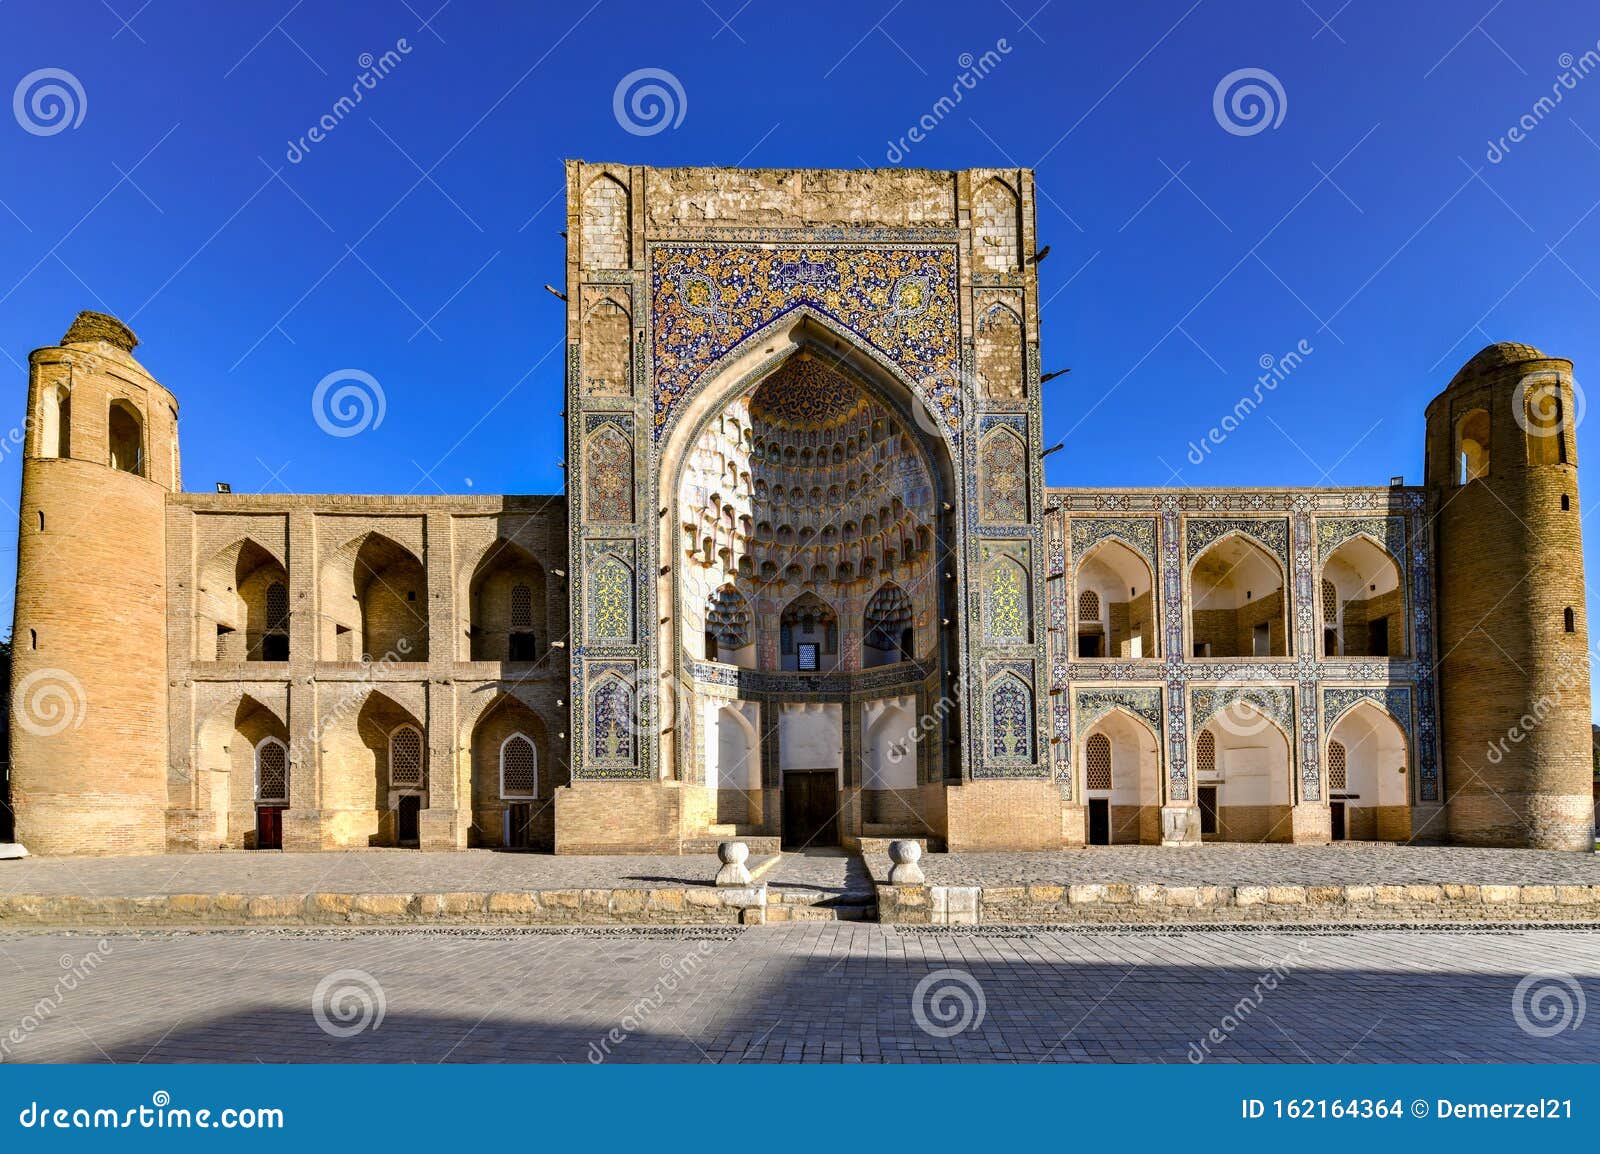 madrasah of abdulaziz khan - bukhara, uzbekistan